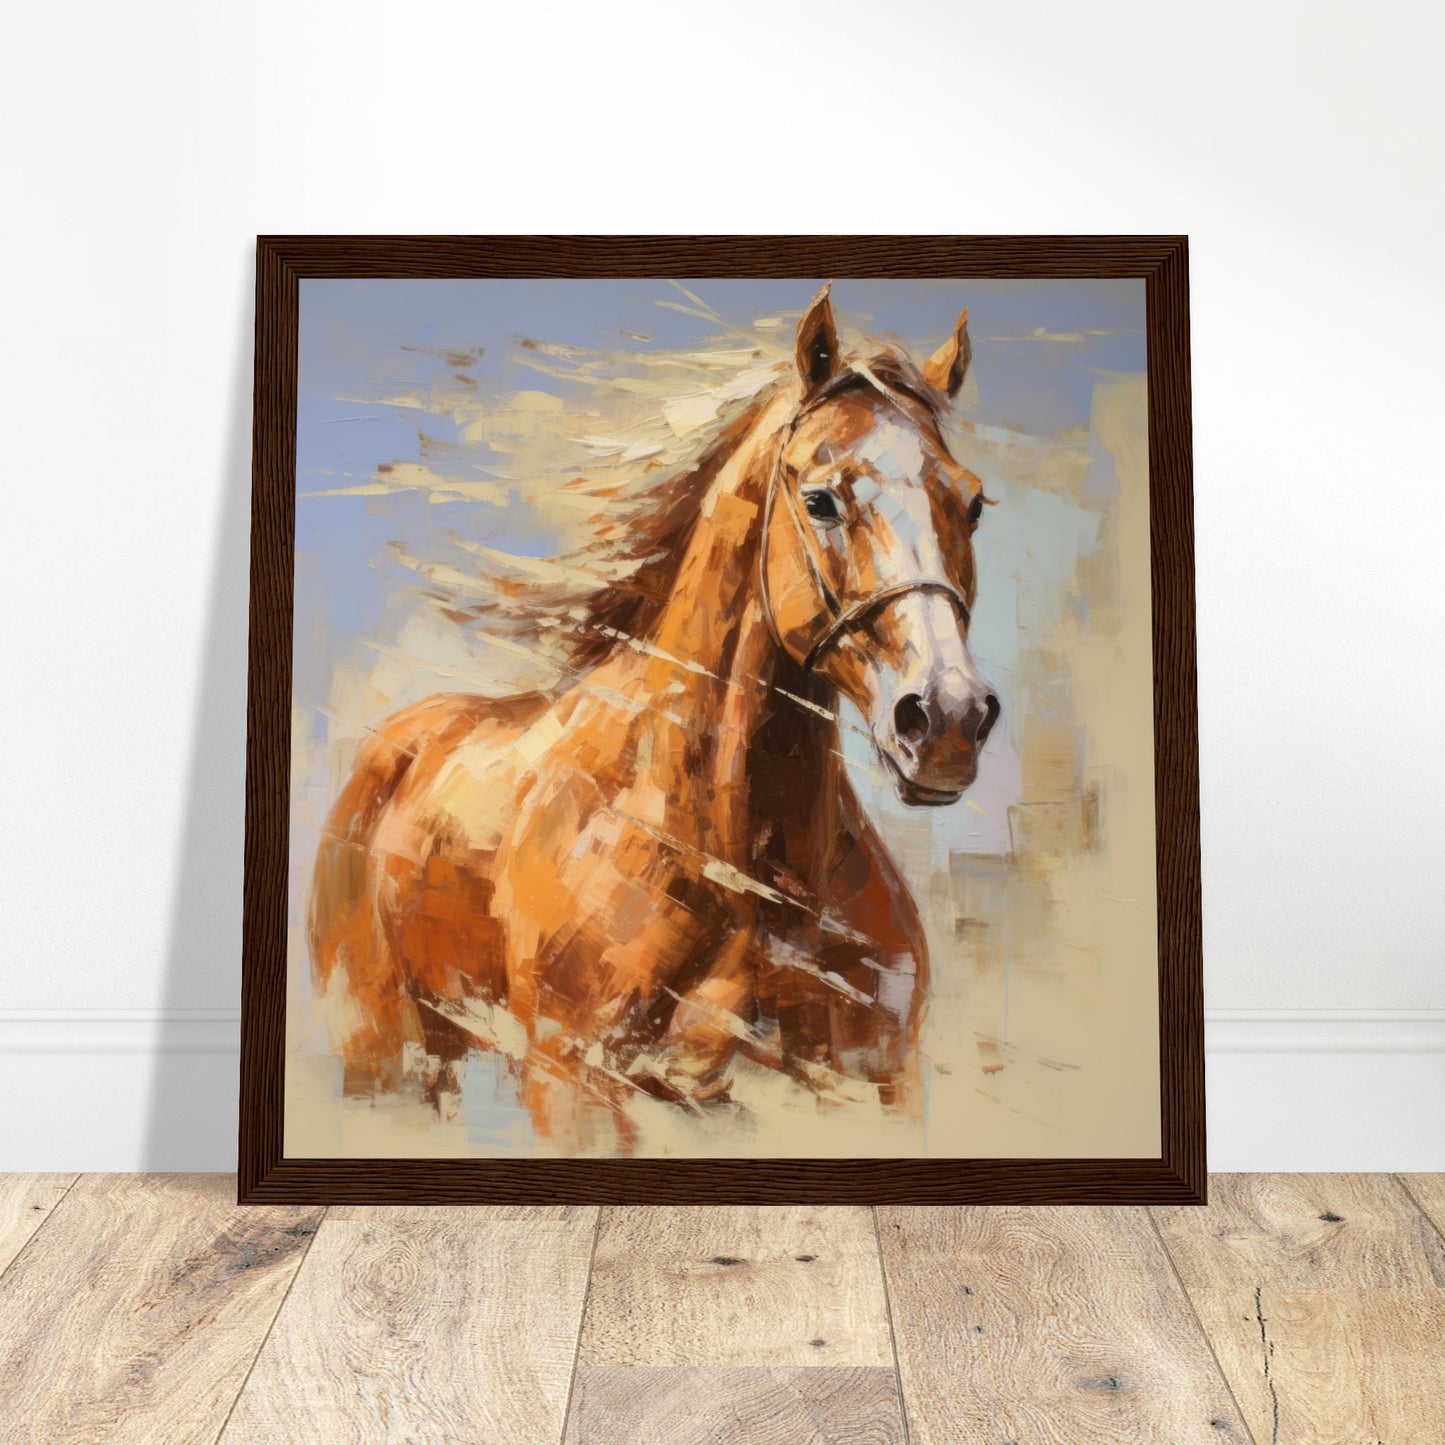 Equine Beauty #06 - Print Room Ltd Dark wood frame 70x70 cm / 28x28"